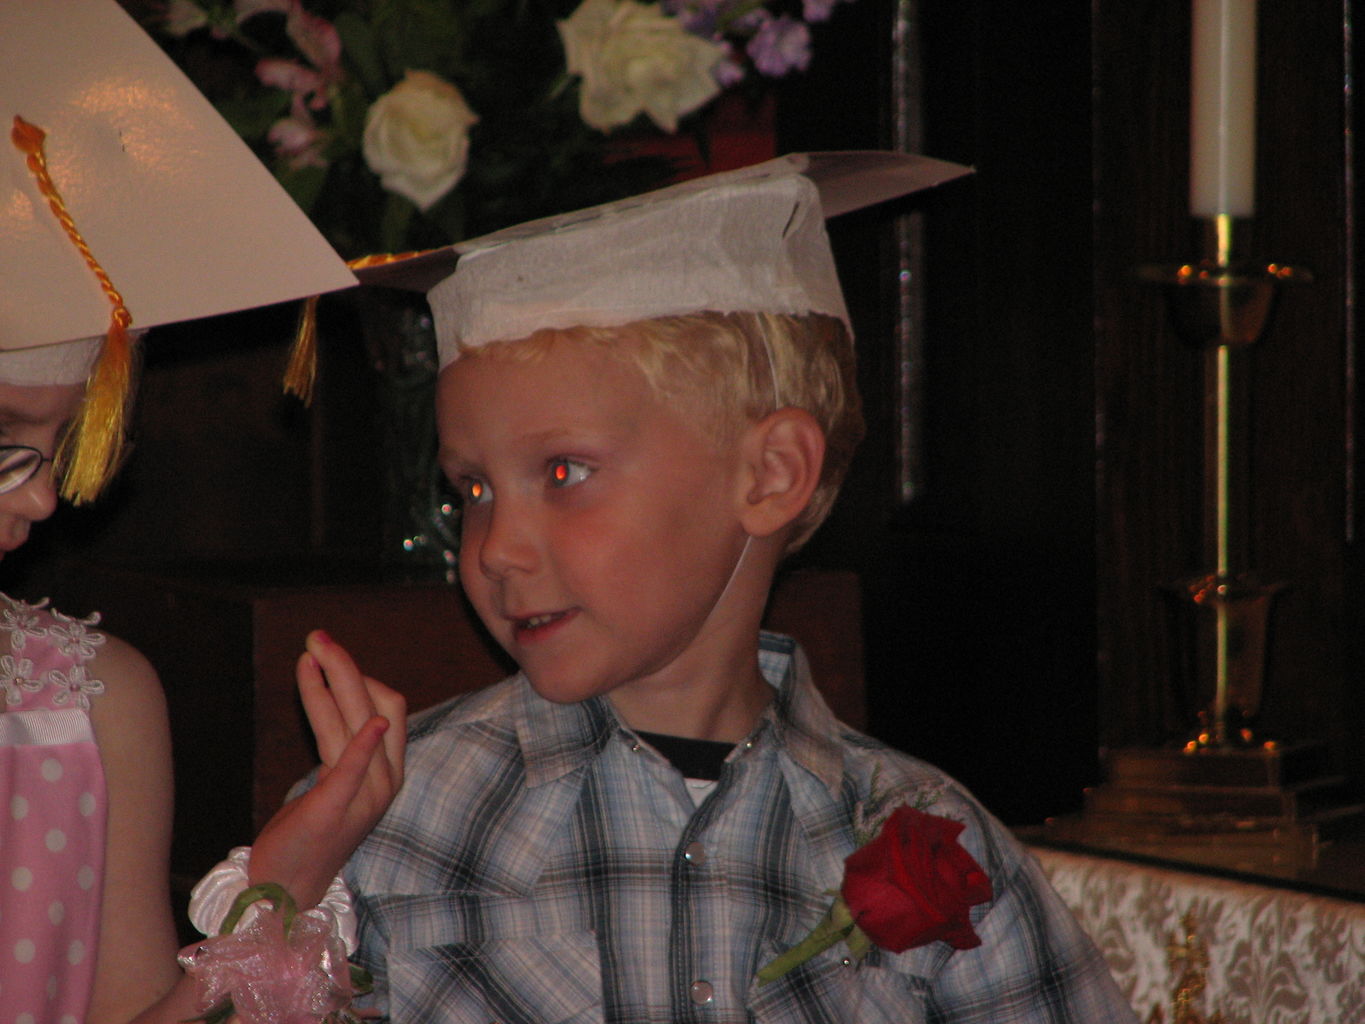 James Preschool Graduation